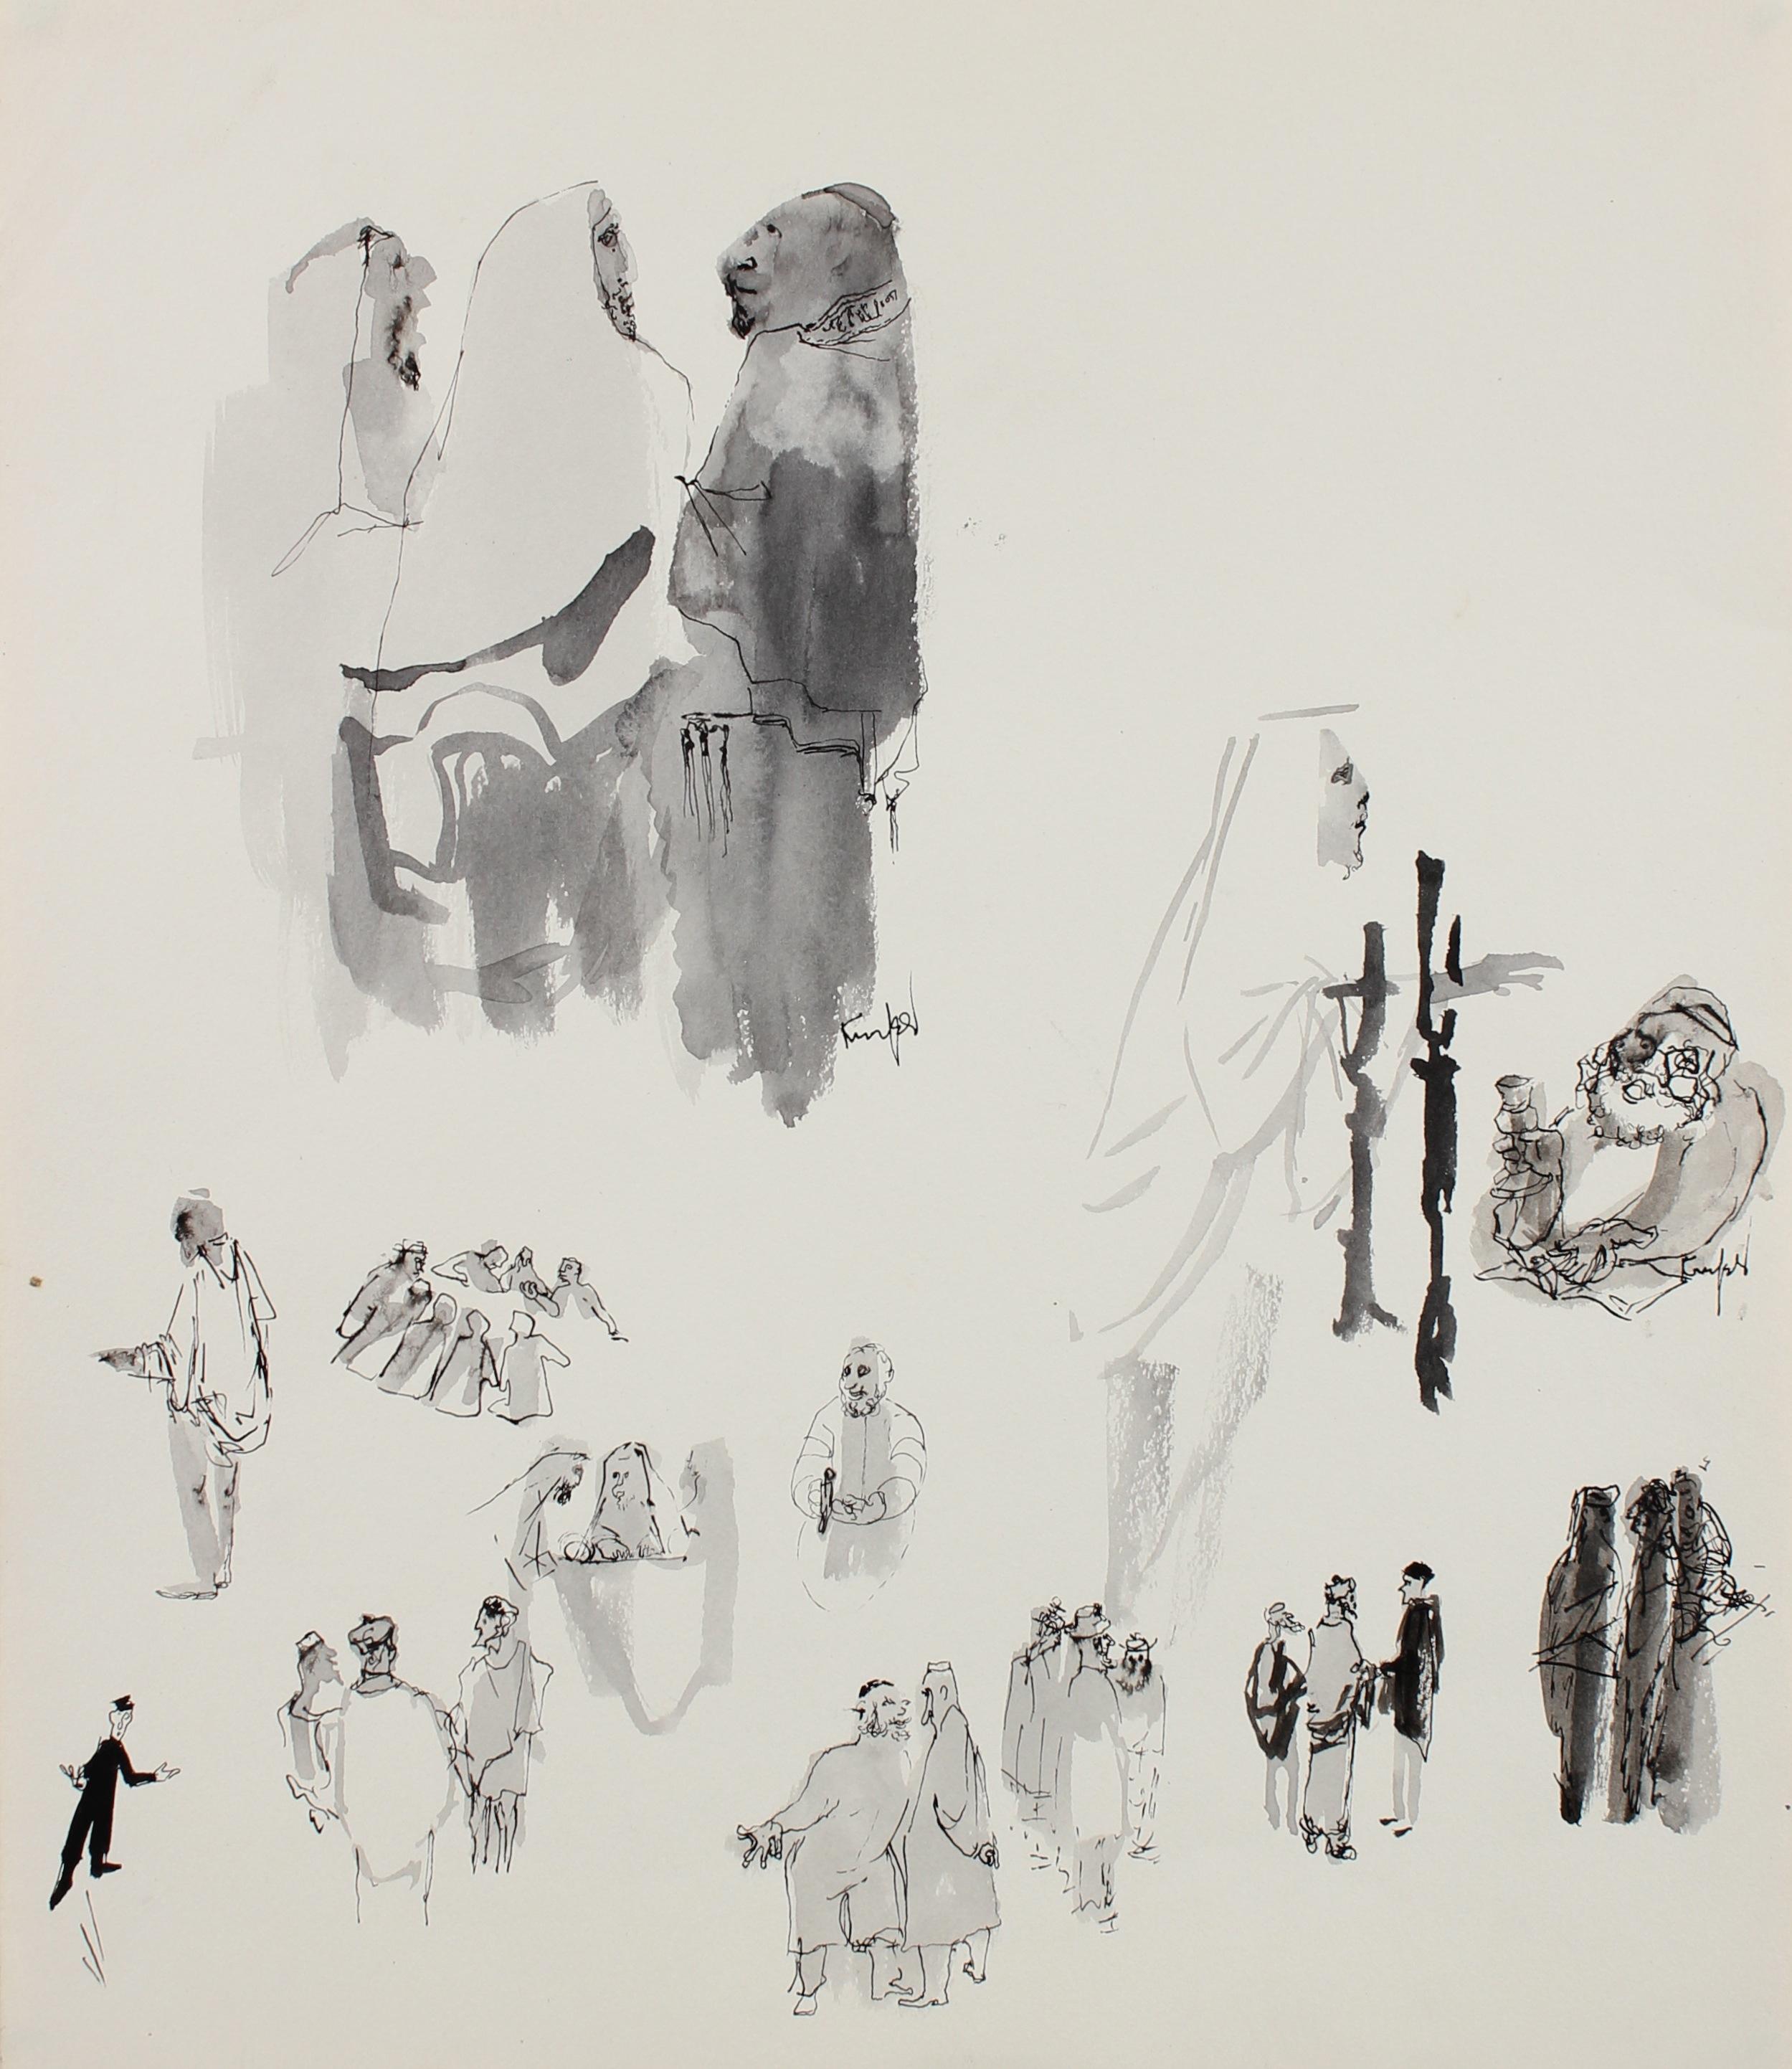 Morris Kronfeld Figurative Art - 1960s-70s Drawing of Multiple People Scenes in Ink